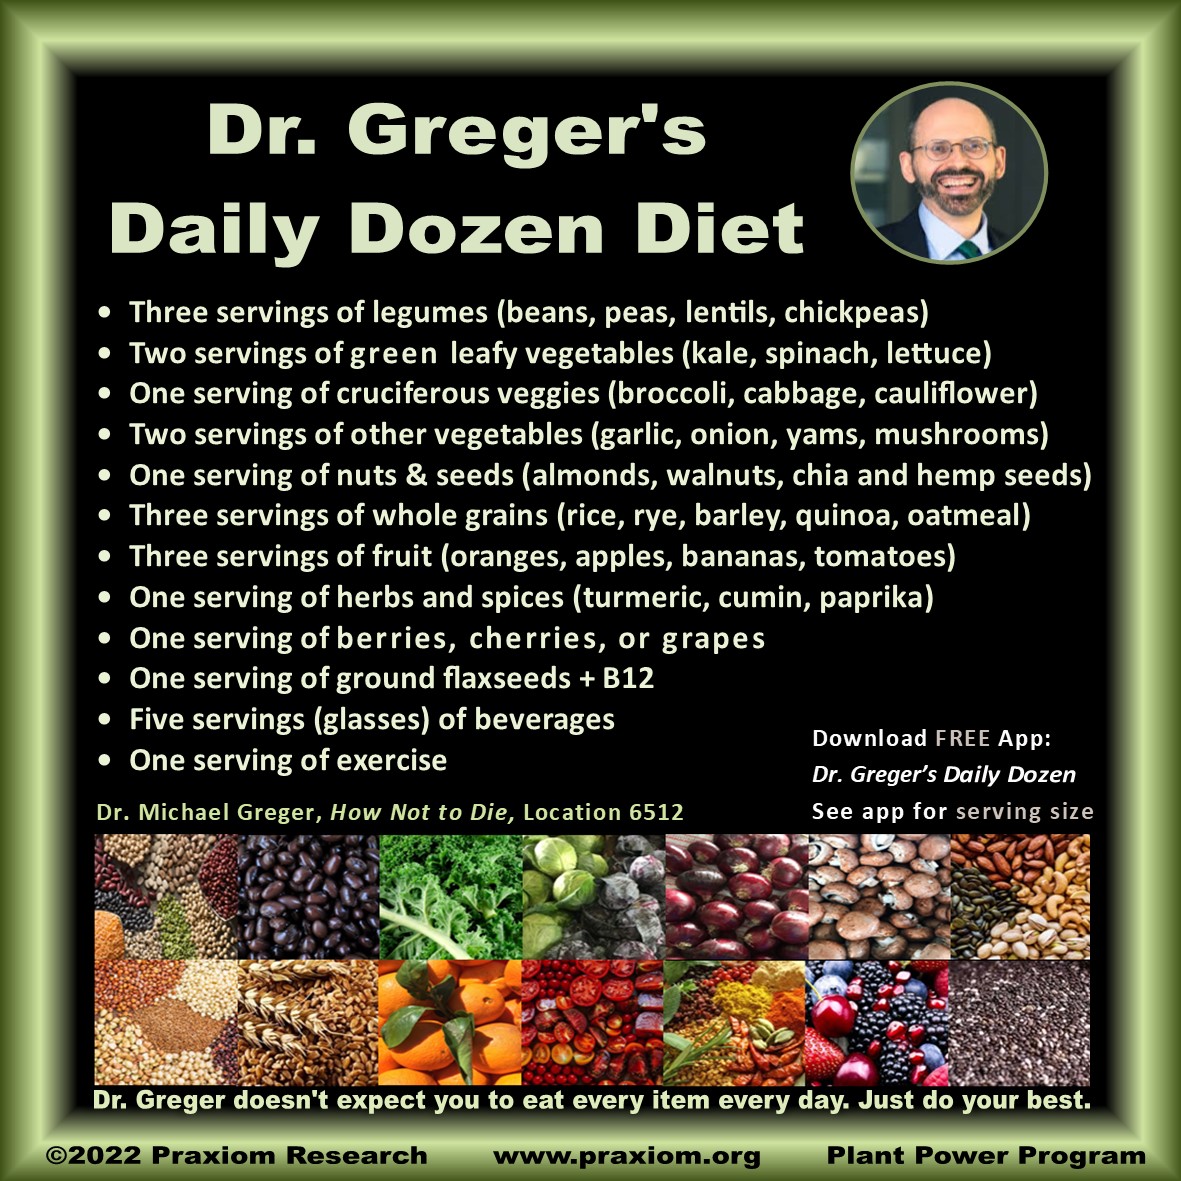 Dr. Greger's Daily Dozen Diet